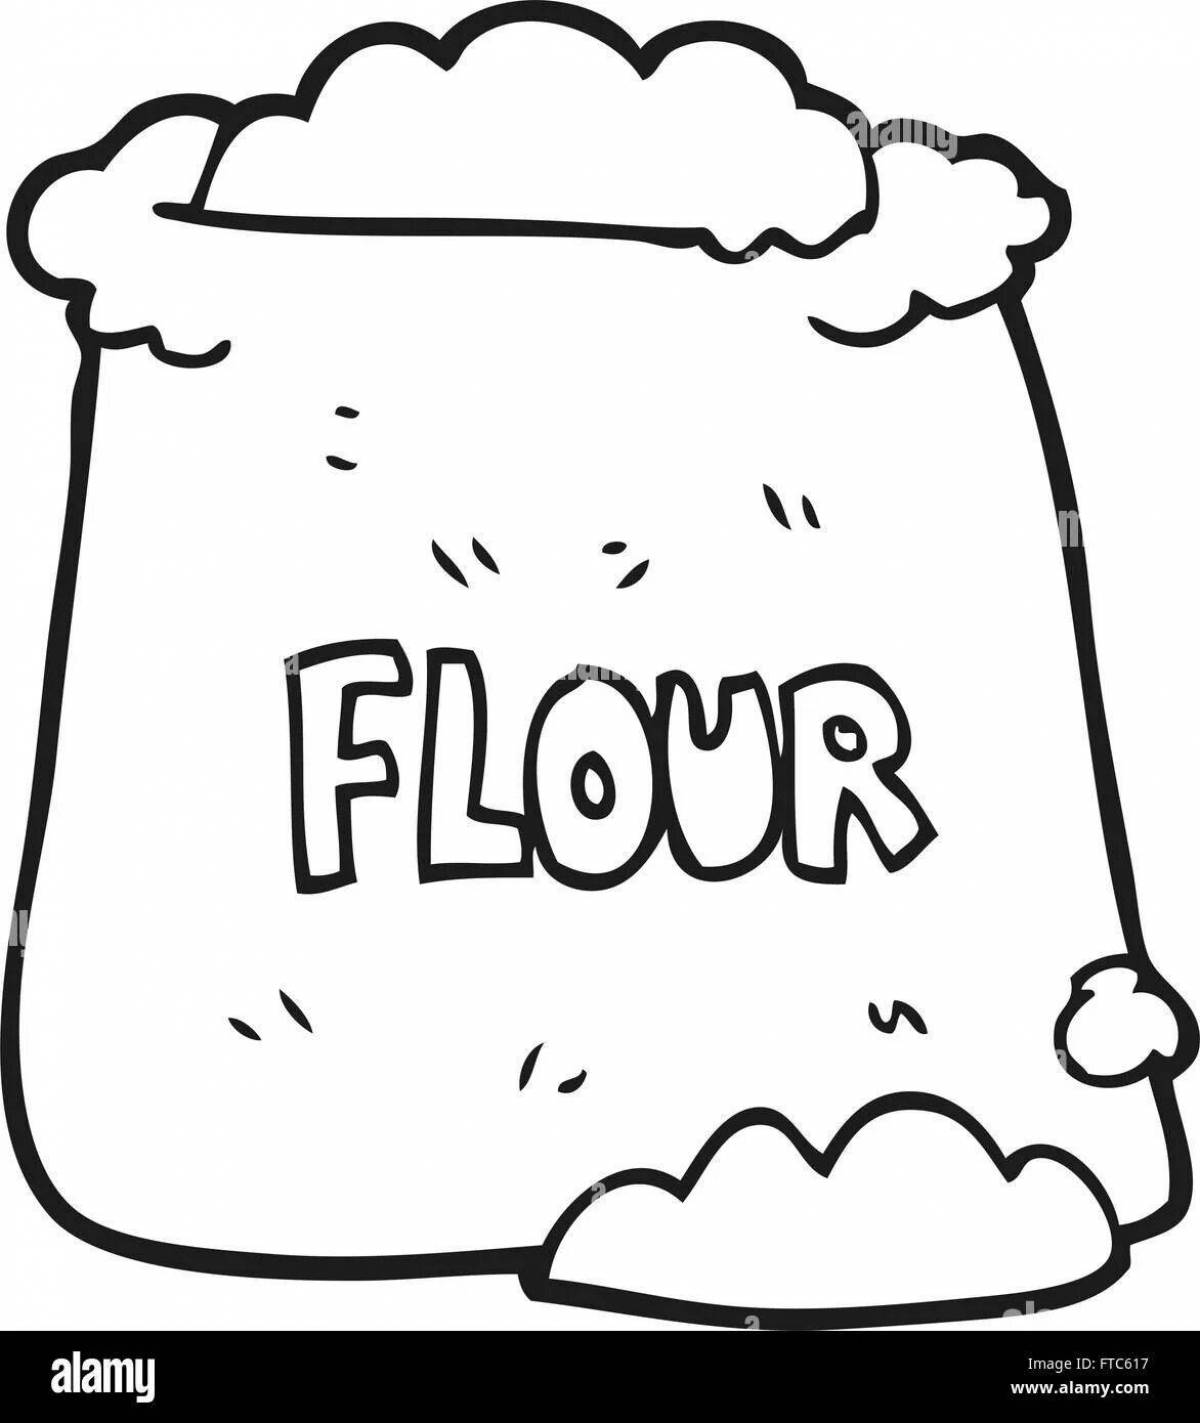 Stimulating flour coloring for children